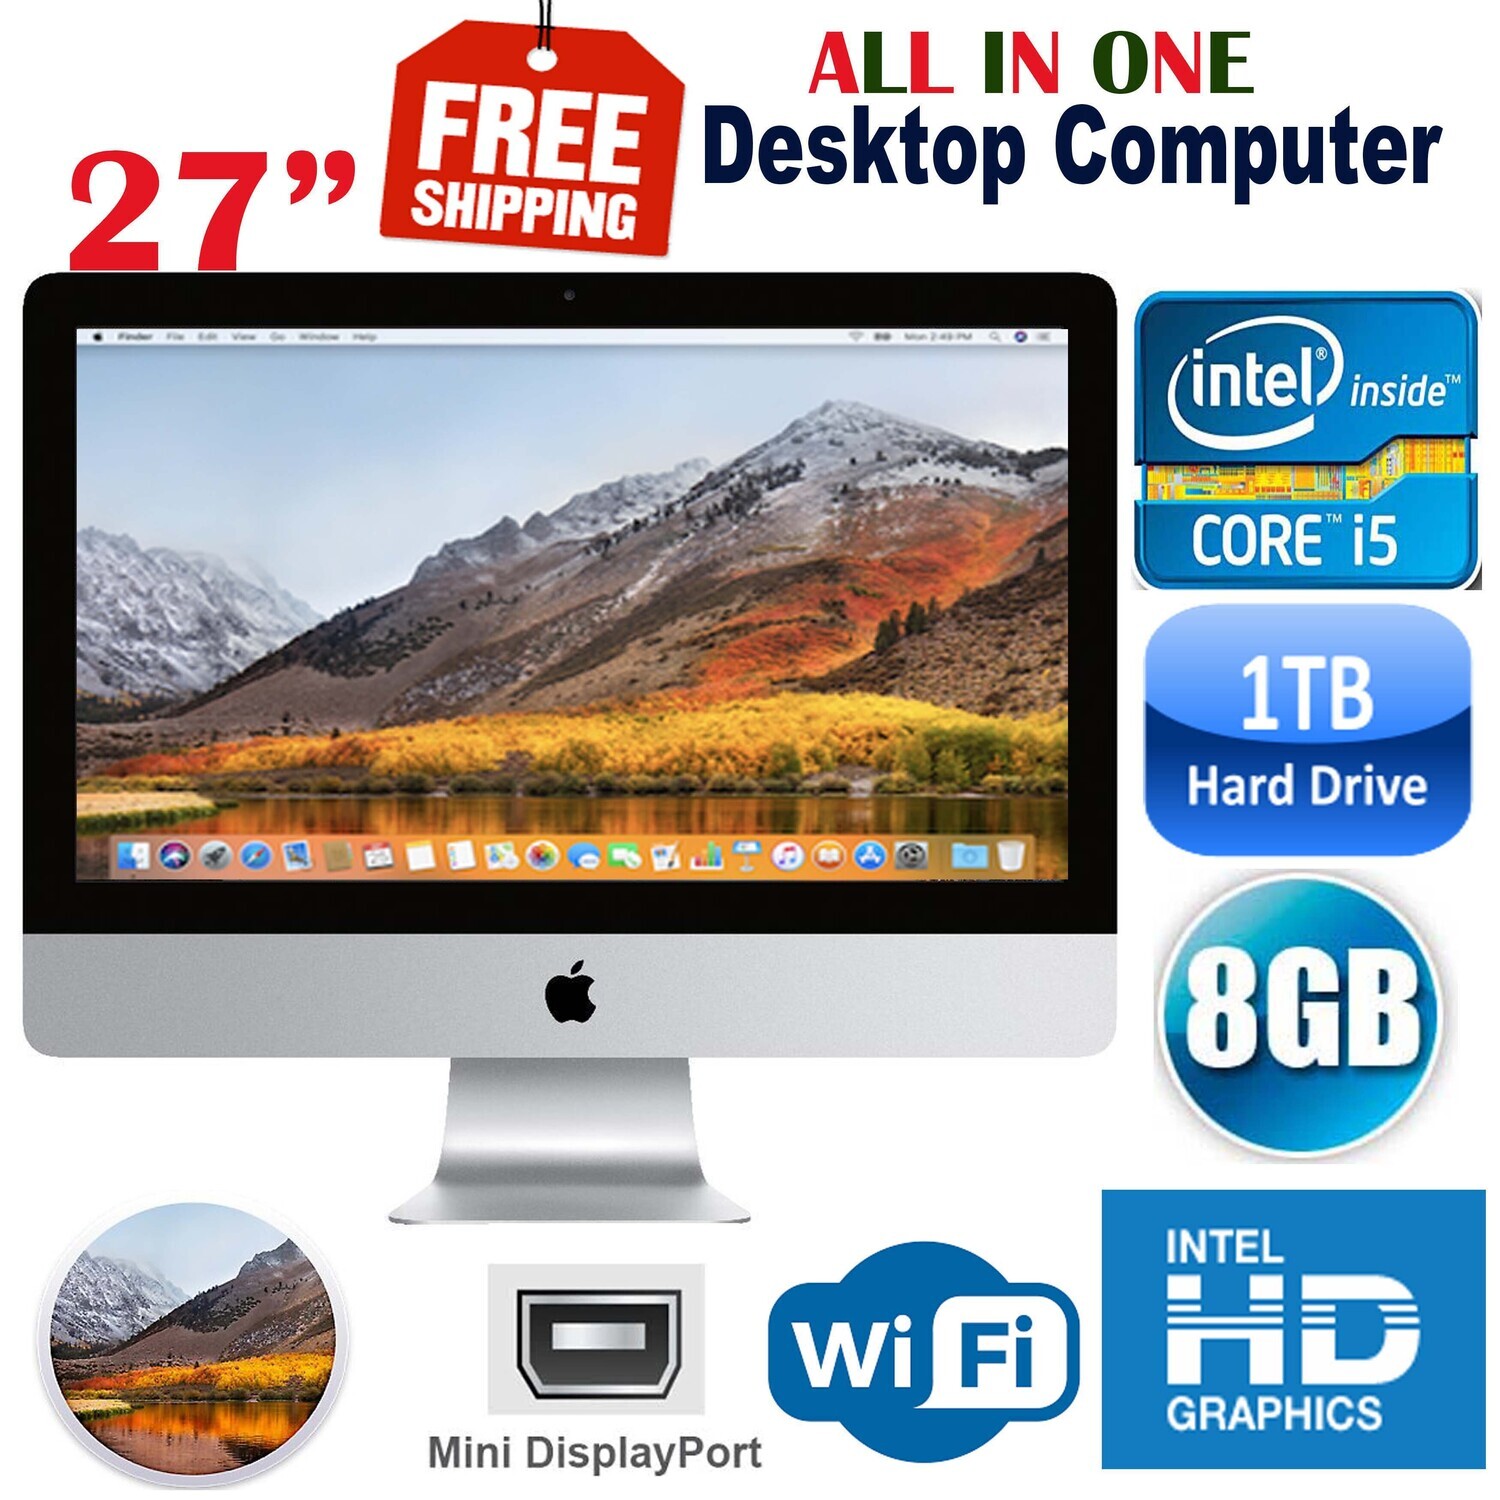 Apple iMac A1312 27” 2011 i5 8GB 1TB AIO Desktop PC HD Graphic MacOS High Sierra